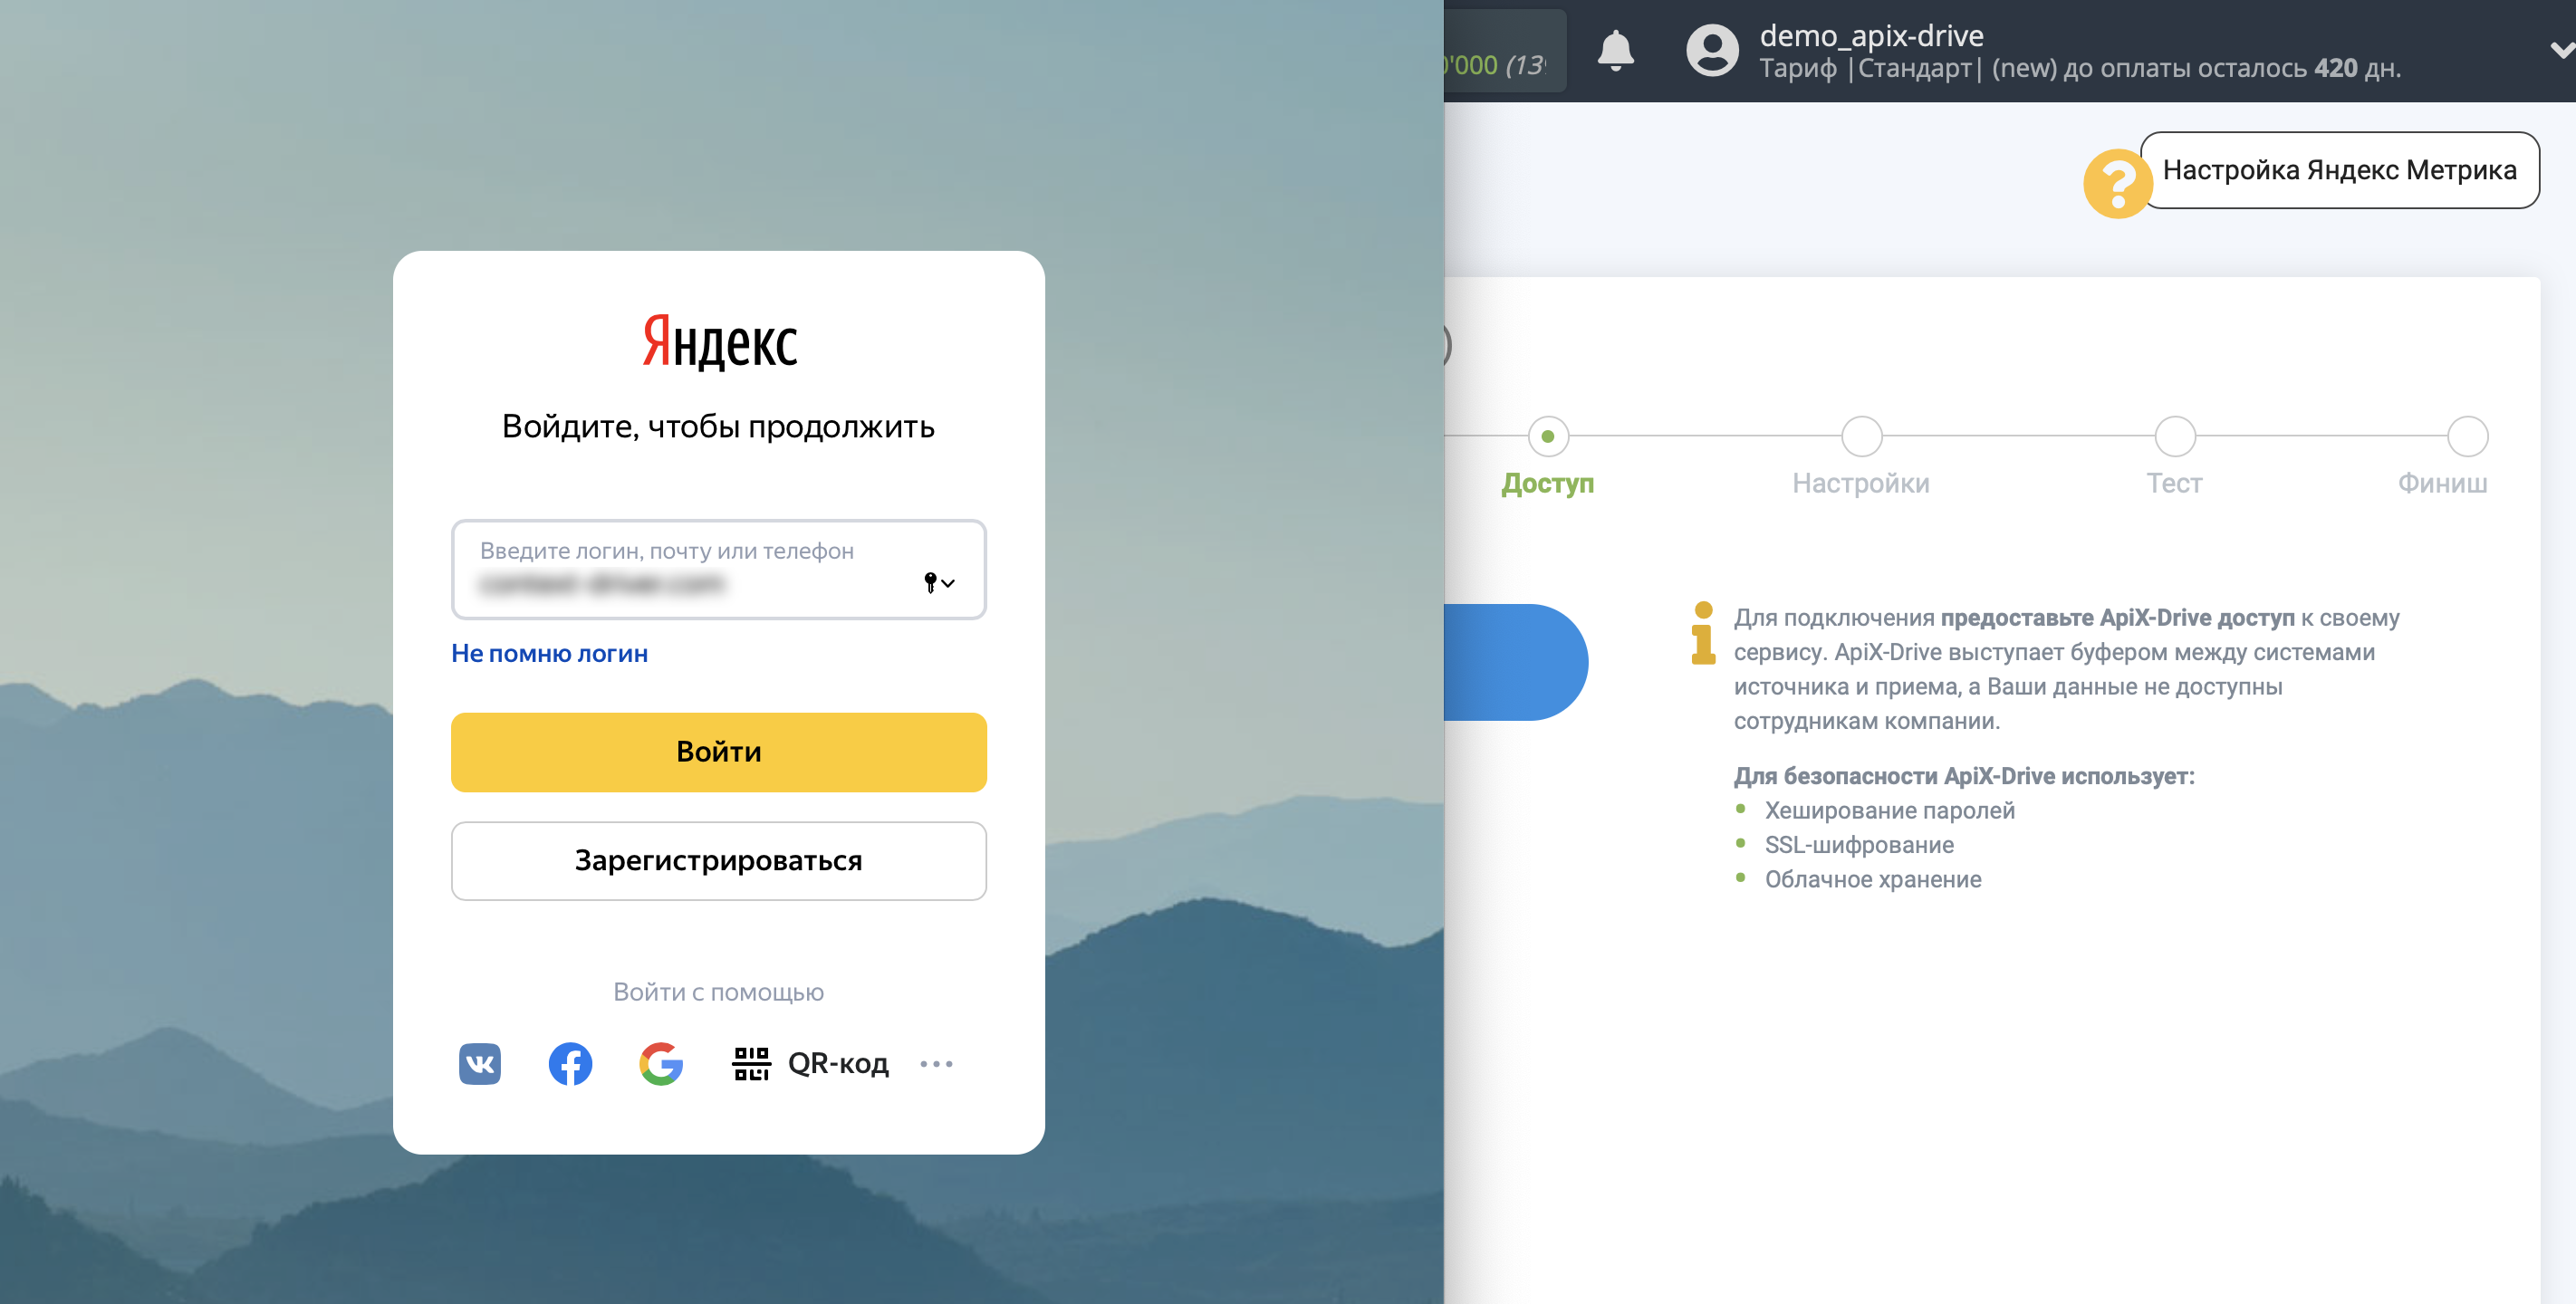 Настройка Яндекс Метрика в качестве Приема данных | Подключение аккаунта